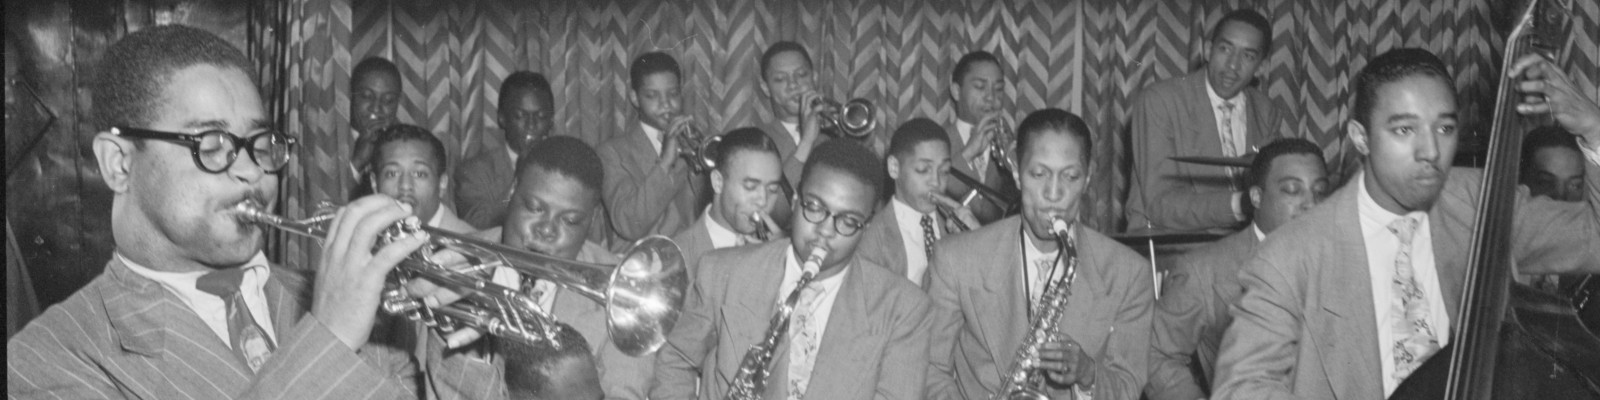 Dizzy Gillespie and Fellow Jazz Musicians